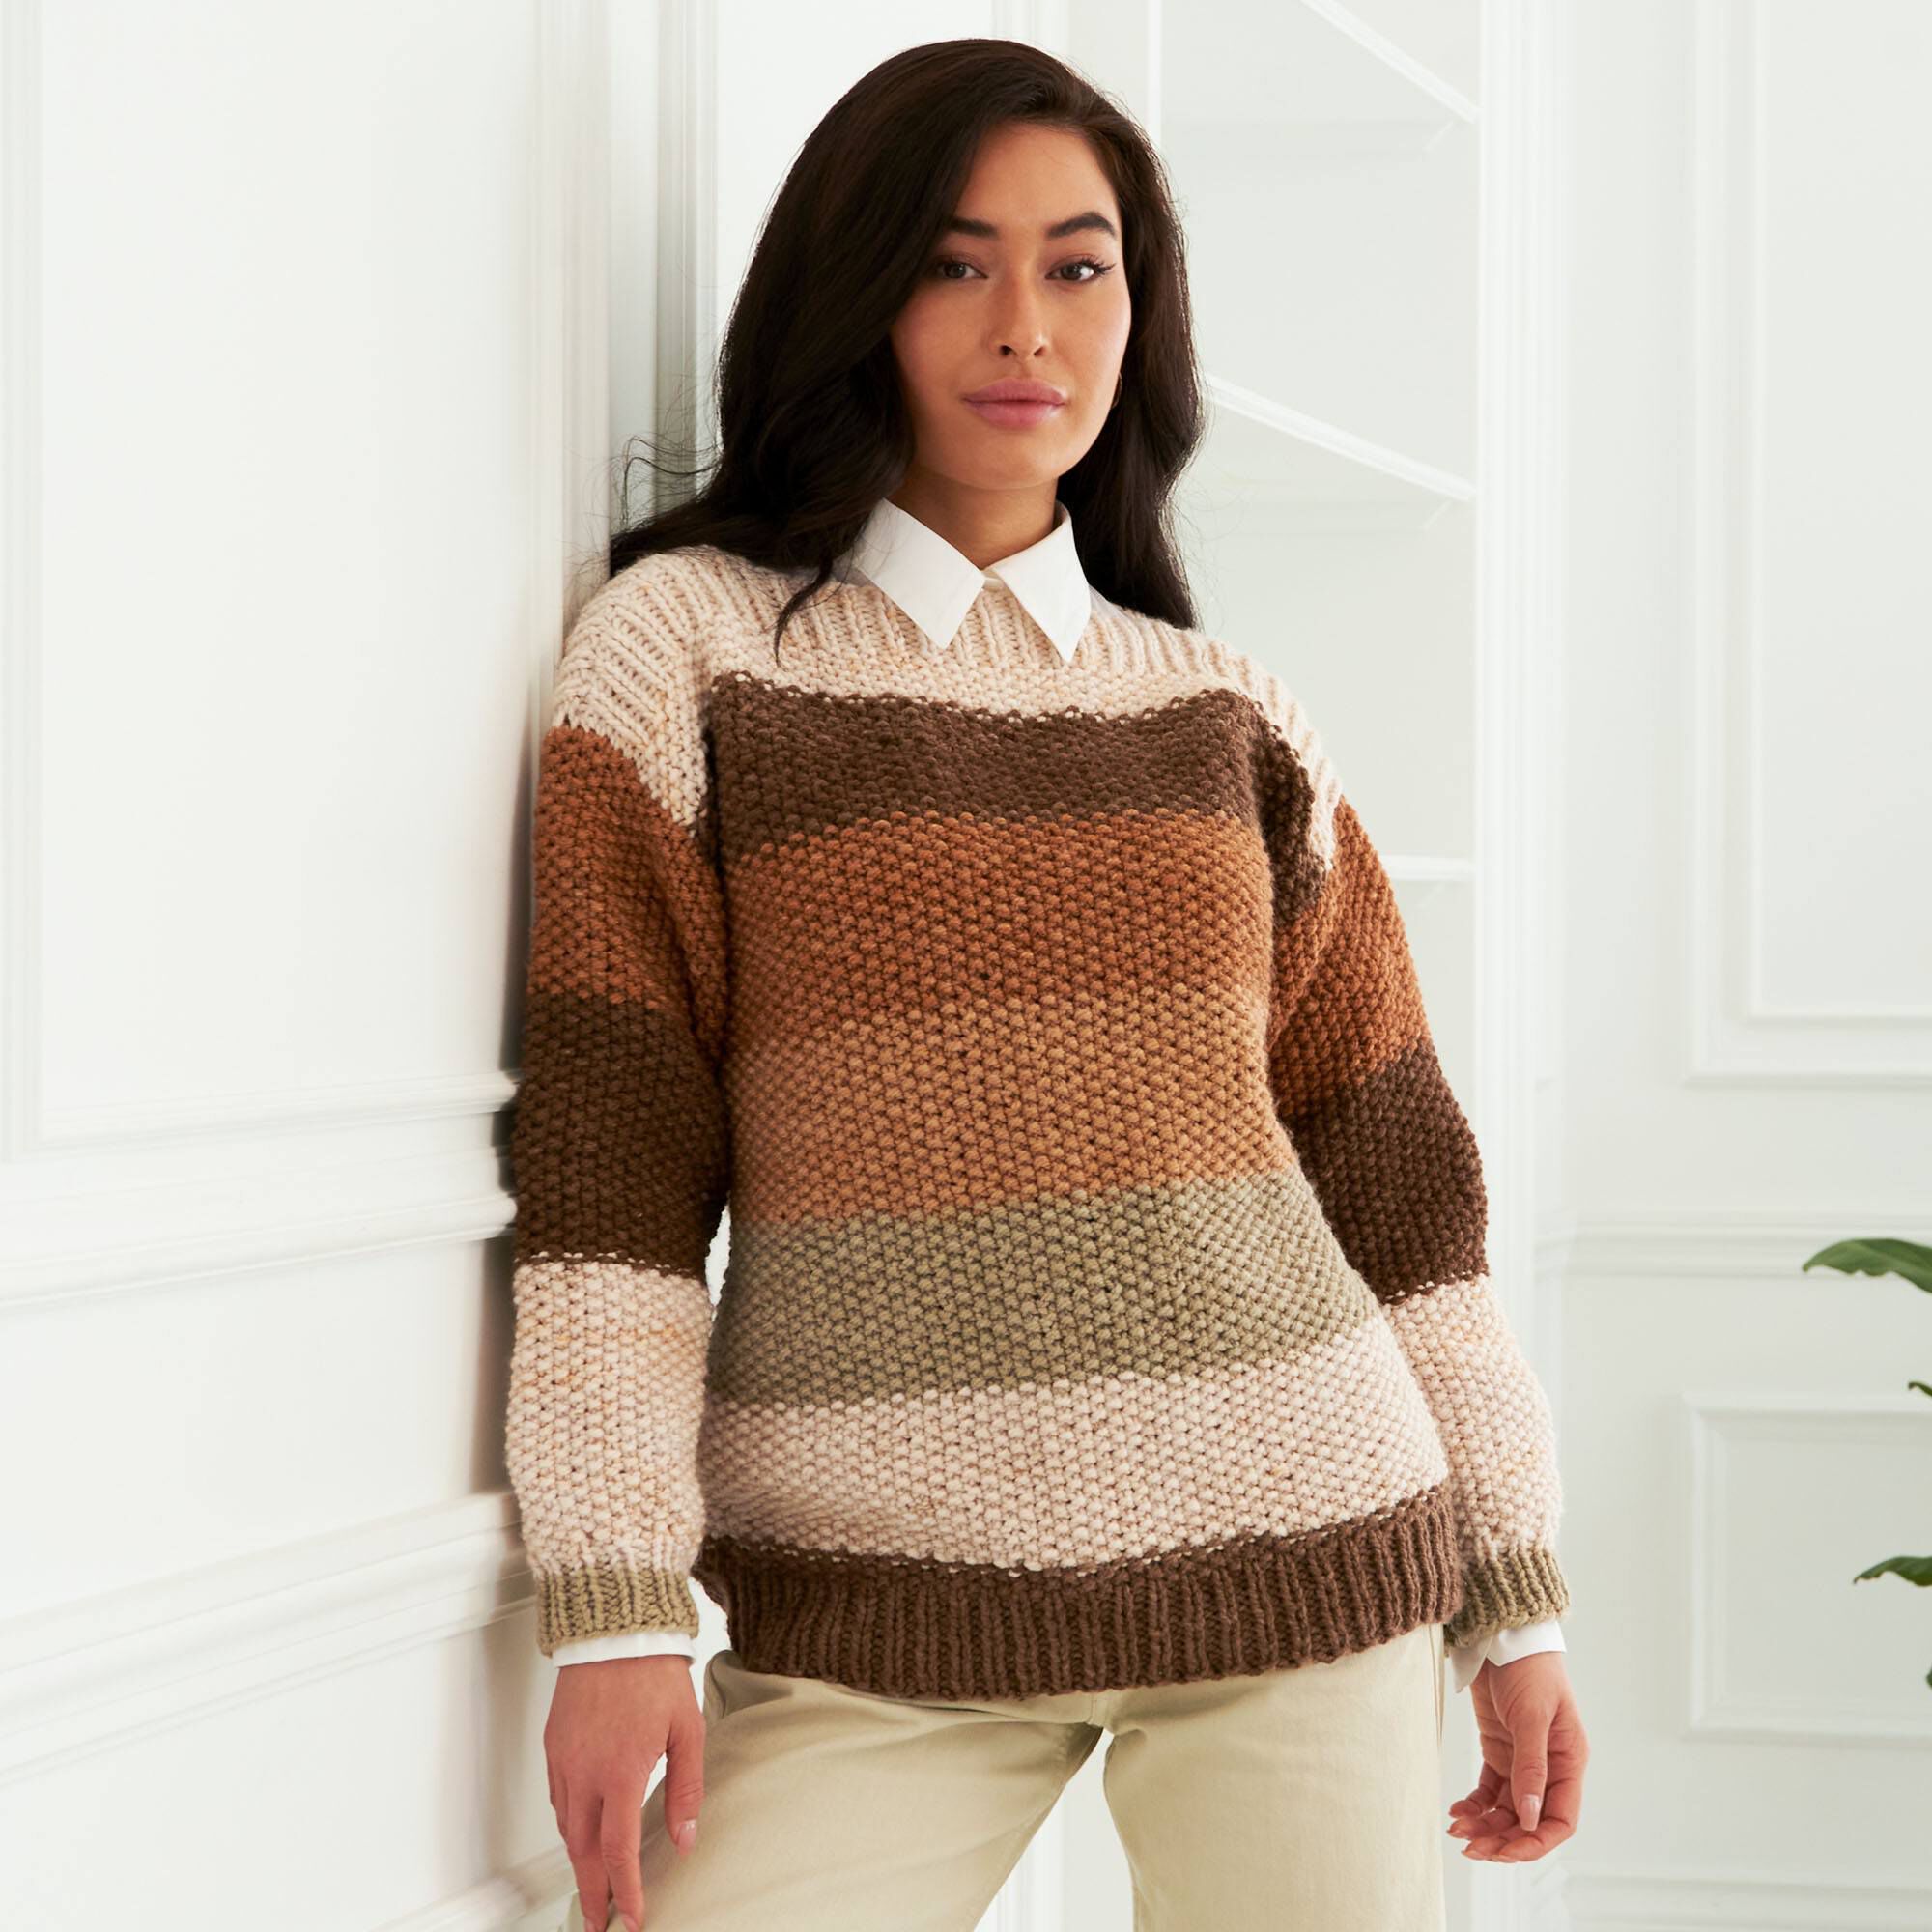 Knitting Patterns Galore - Let's Go Beginner Stripes Sweater